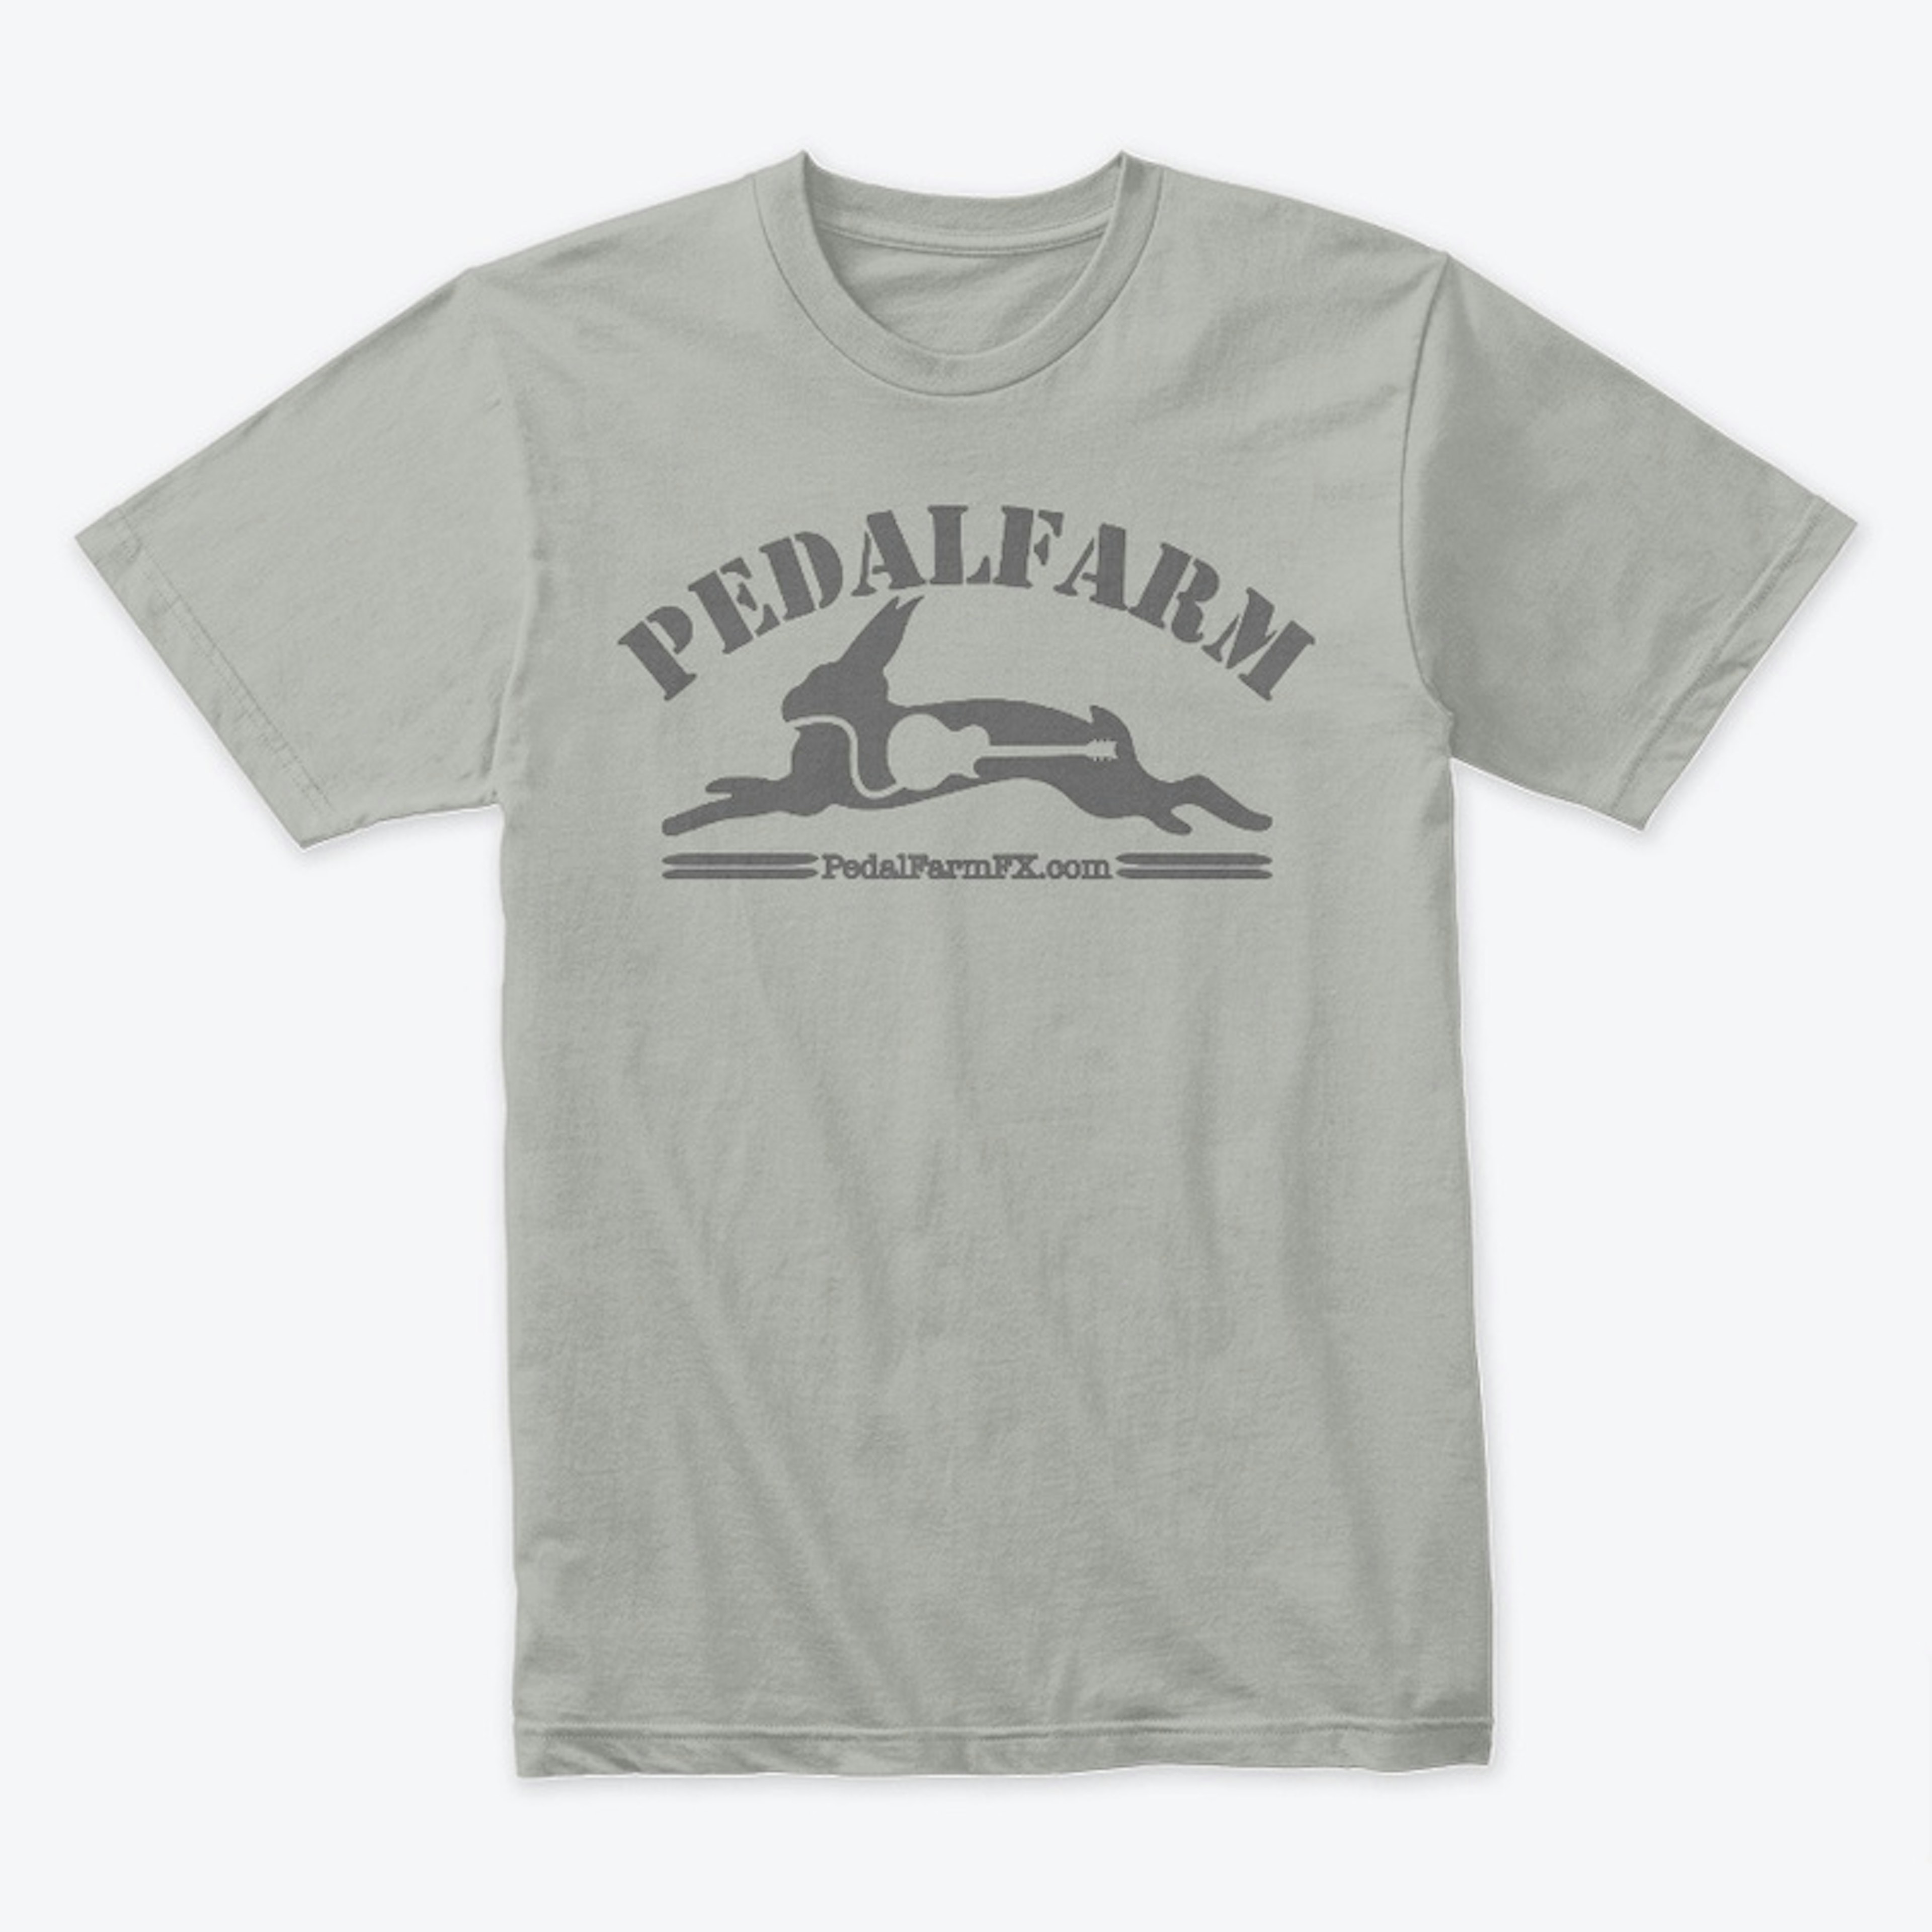 PedalFarm Rabbit Logo Tee